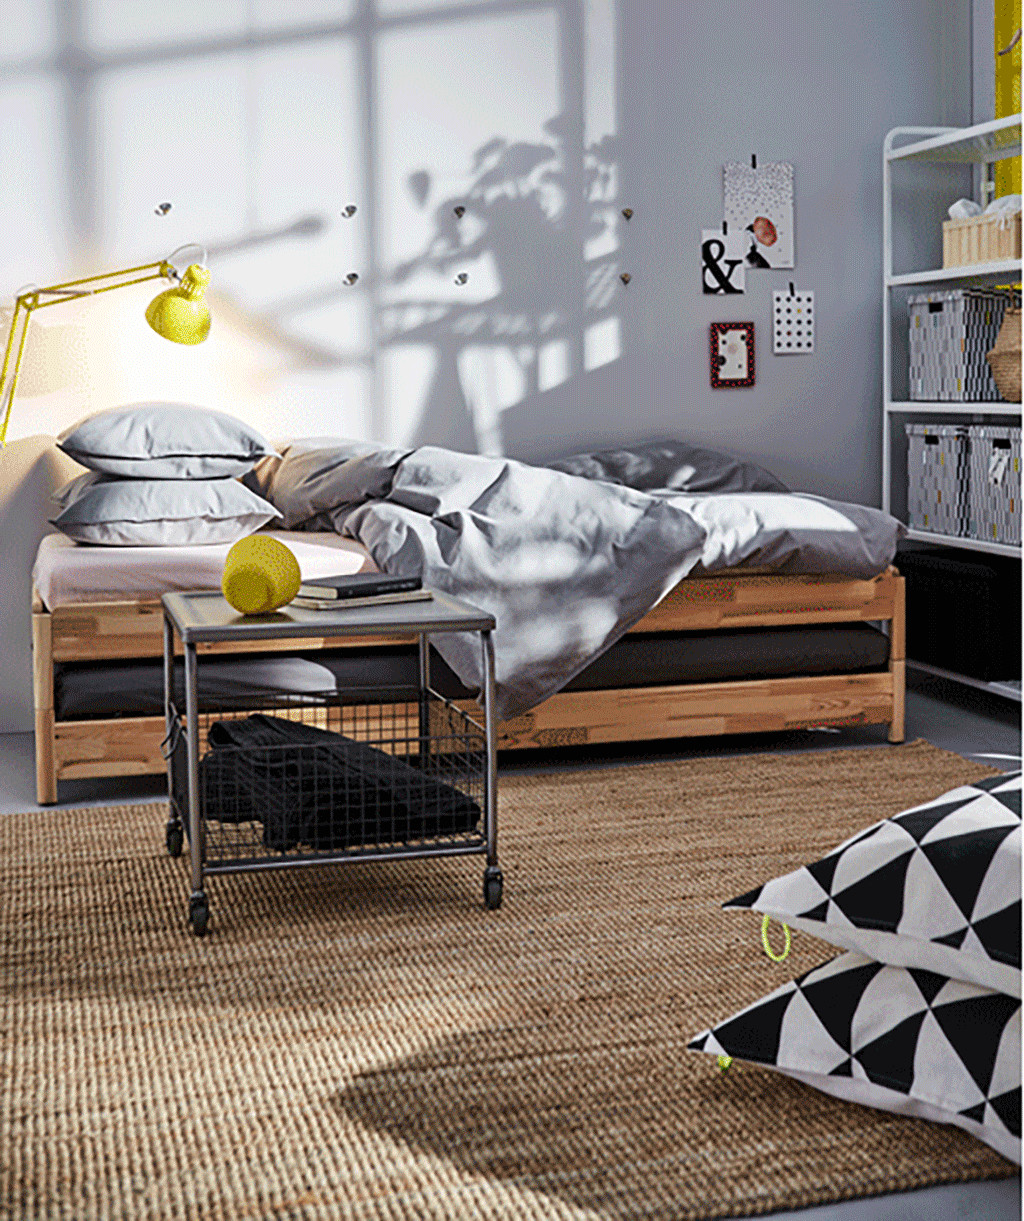 Ikea Bedroom Furniture Set New Furnish A Flexible Small Bedroom Ikea